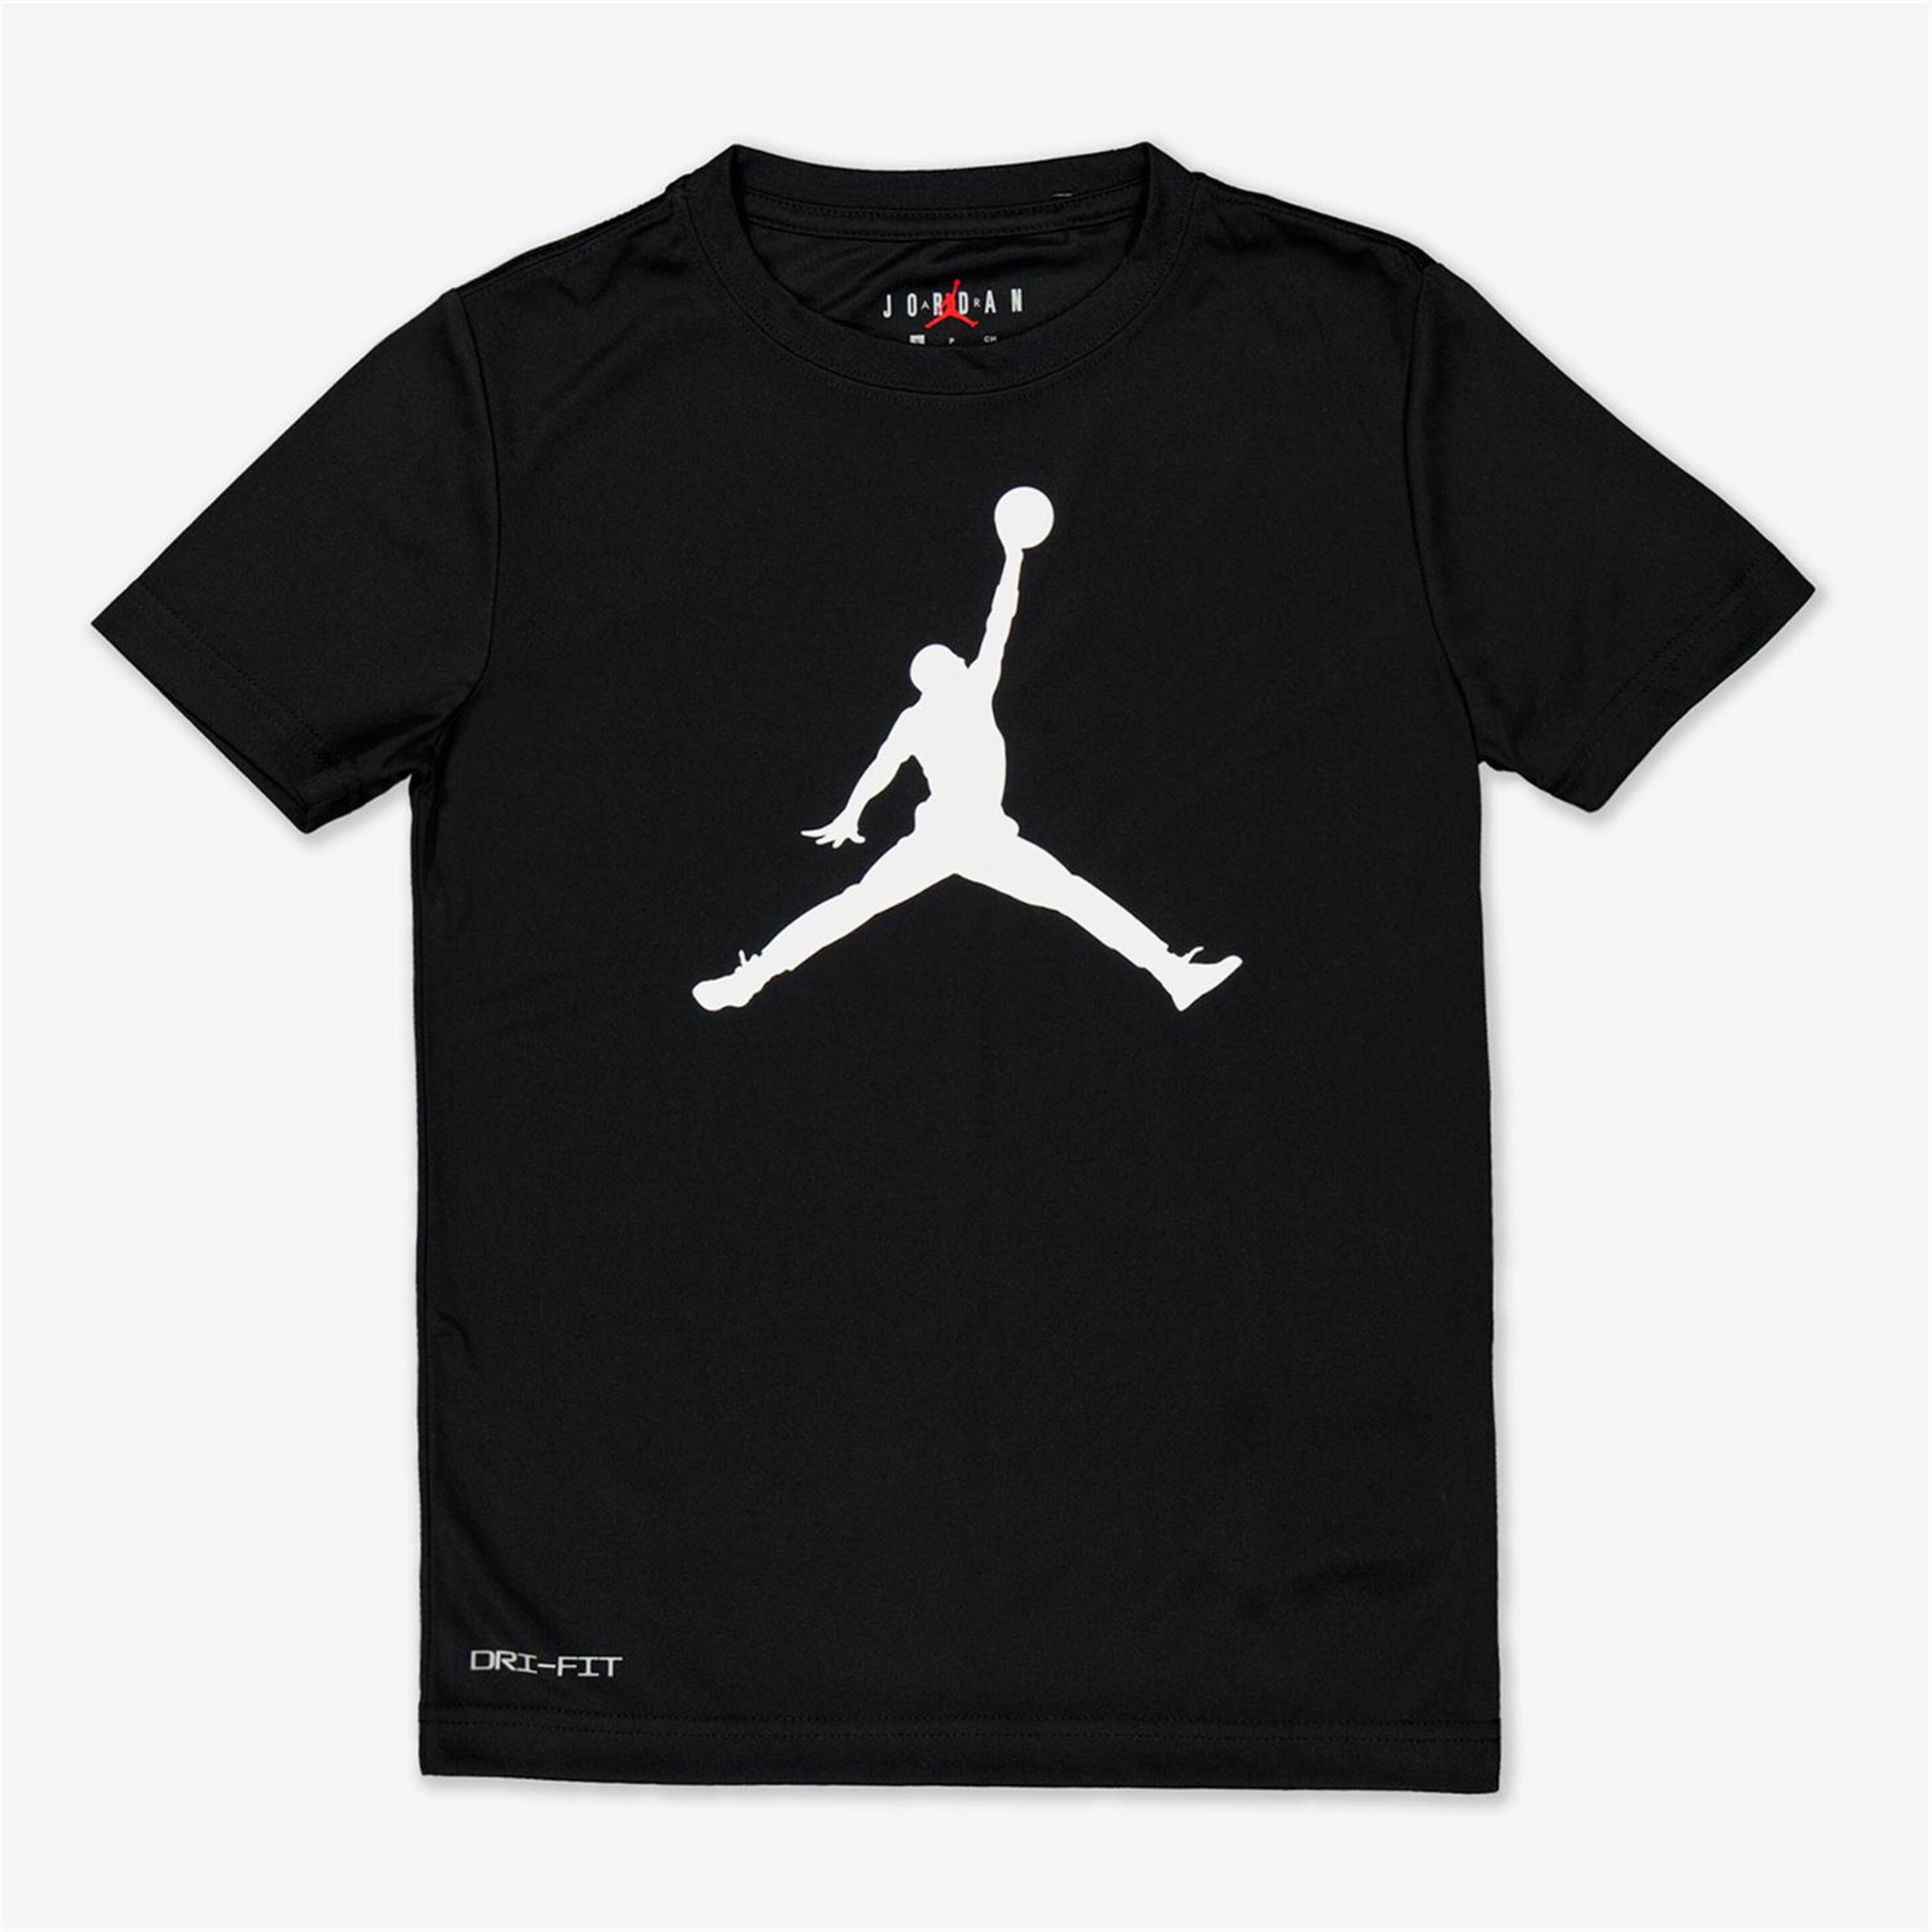 Camiseta Jordan - negro - Camiseta Niño